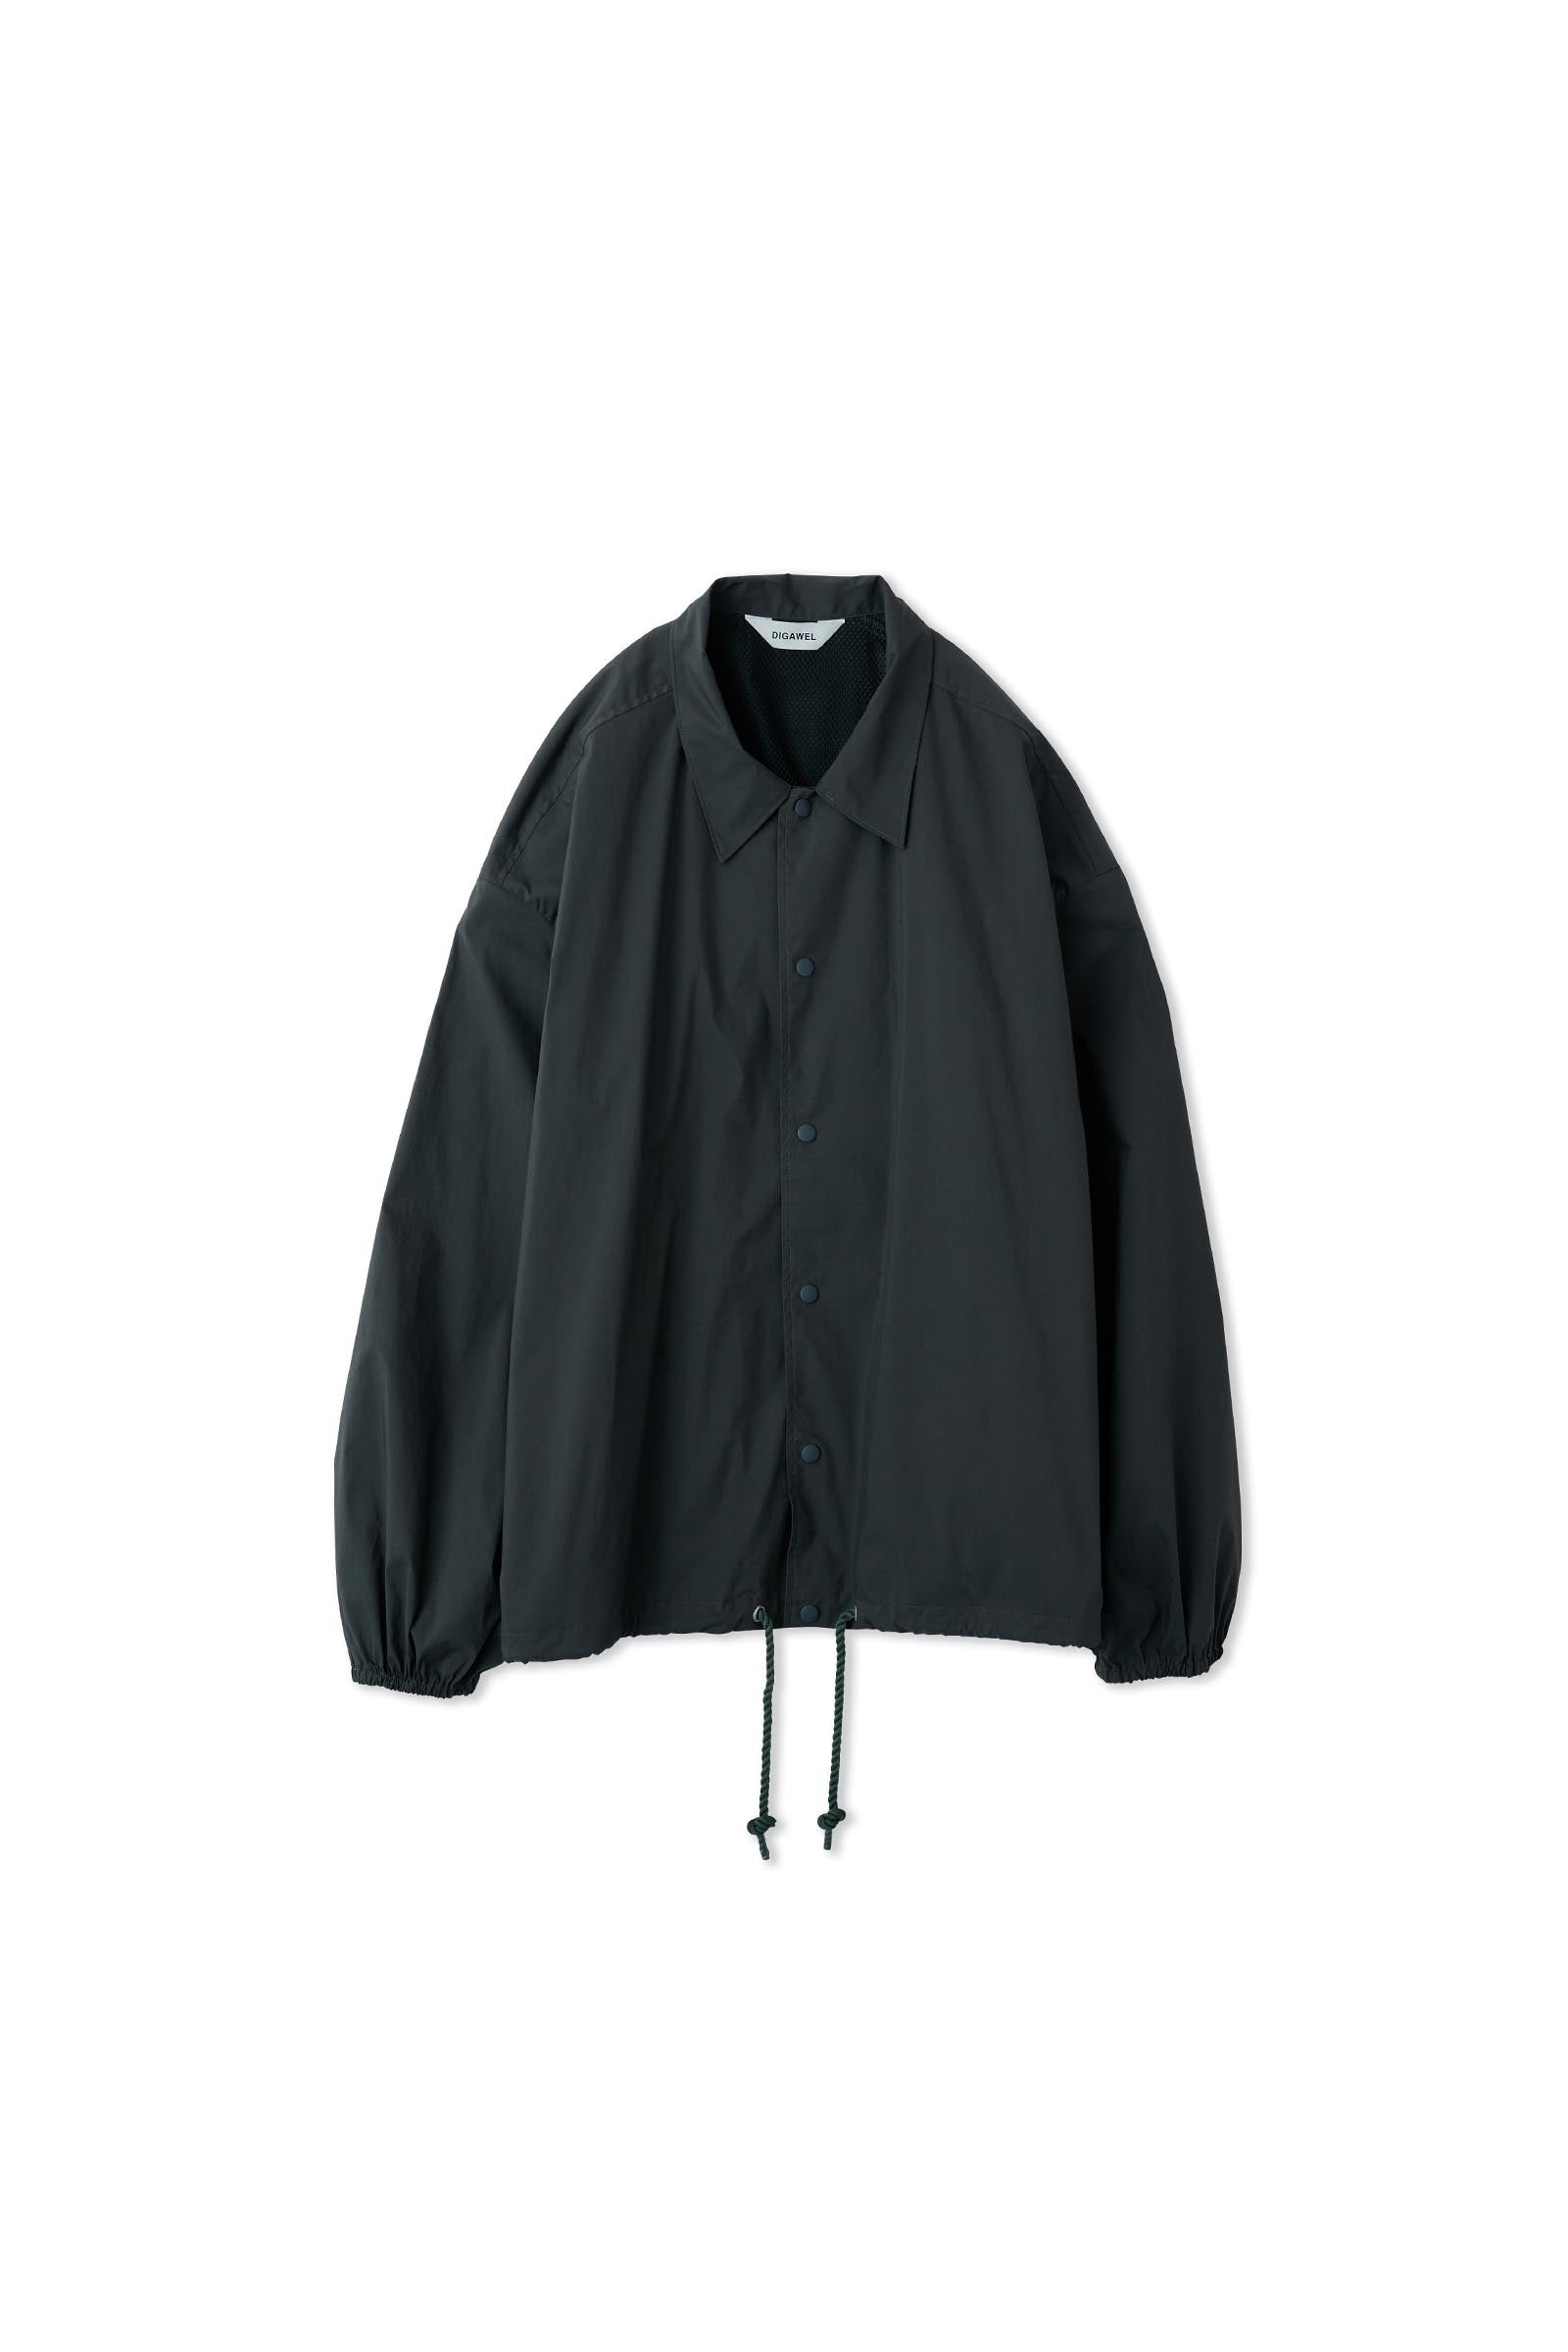 DIGAWEL / Coach L/S shirt jacket